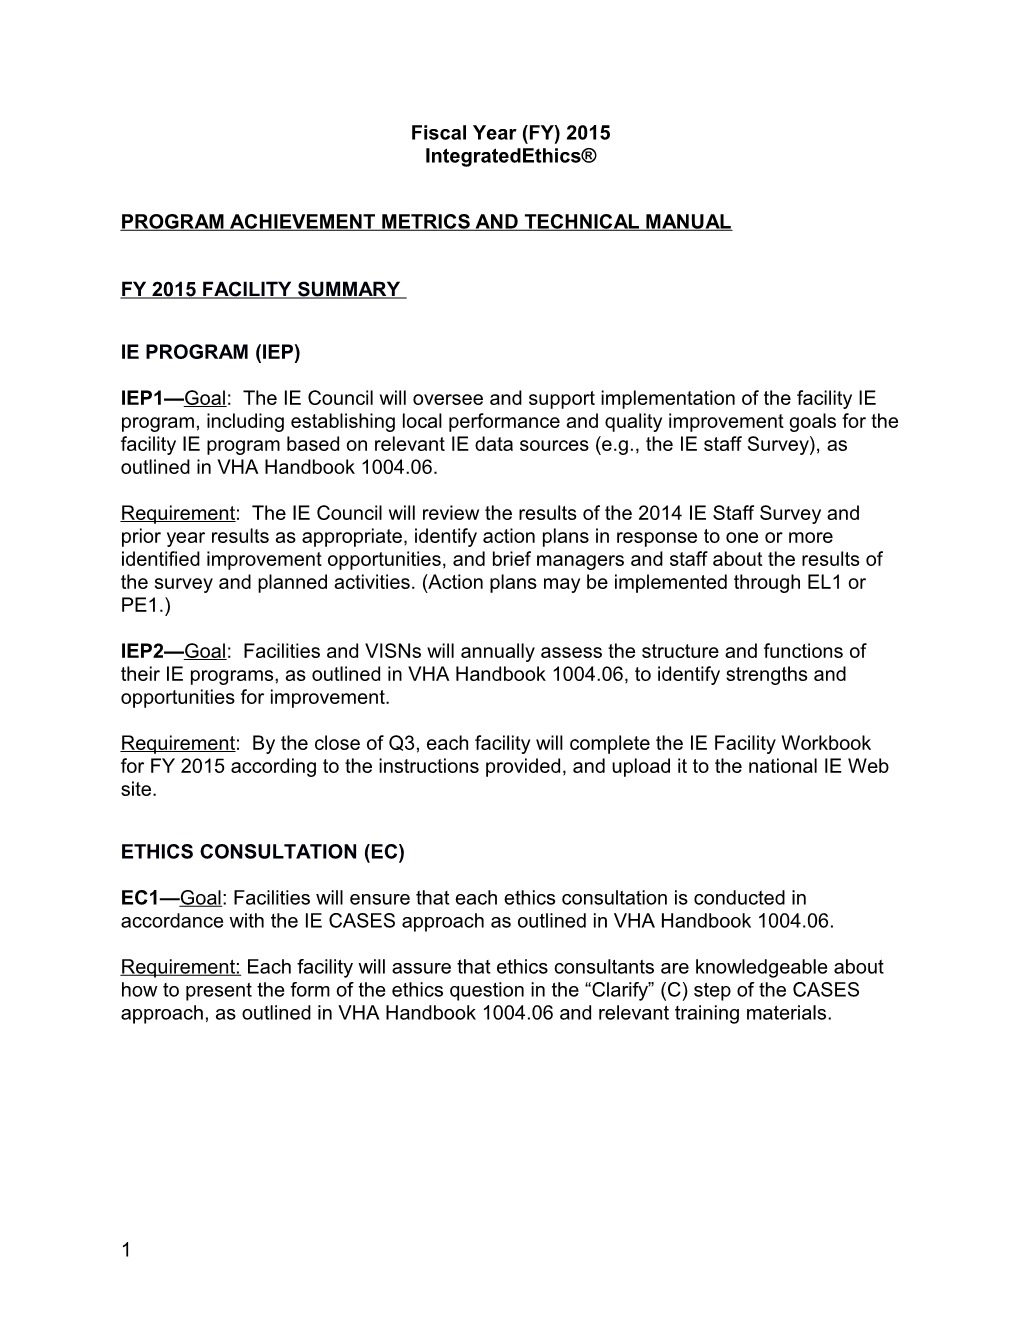 Program Achievement Metrics and Technical Manual